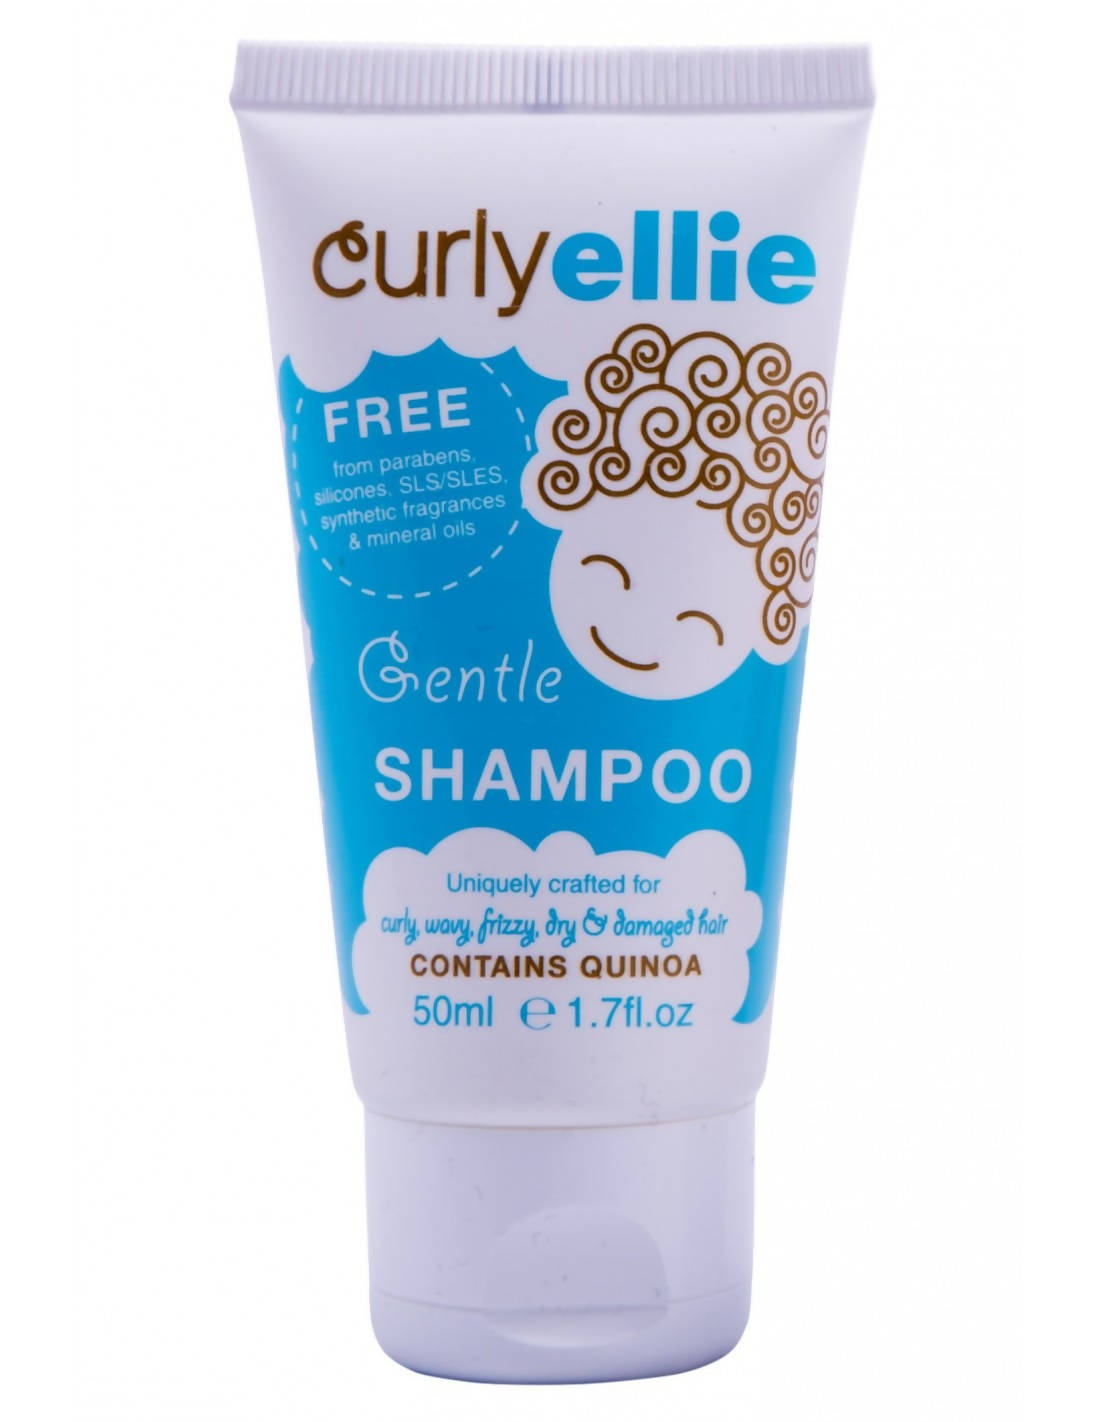 Curlyellie Mini Gentle Shampoo 50ml